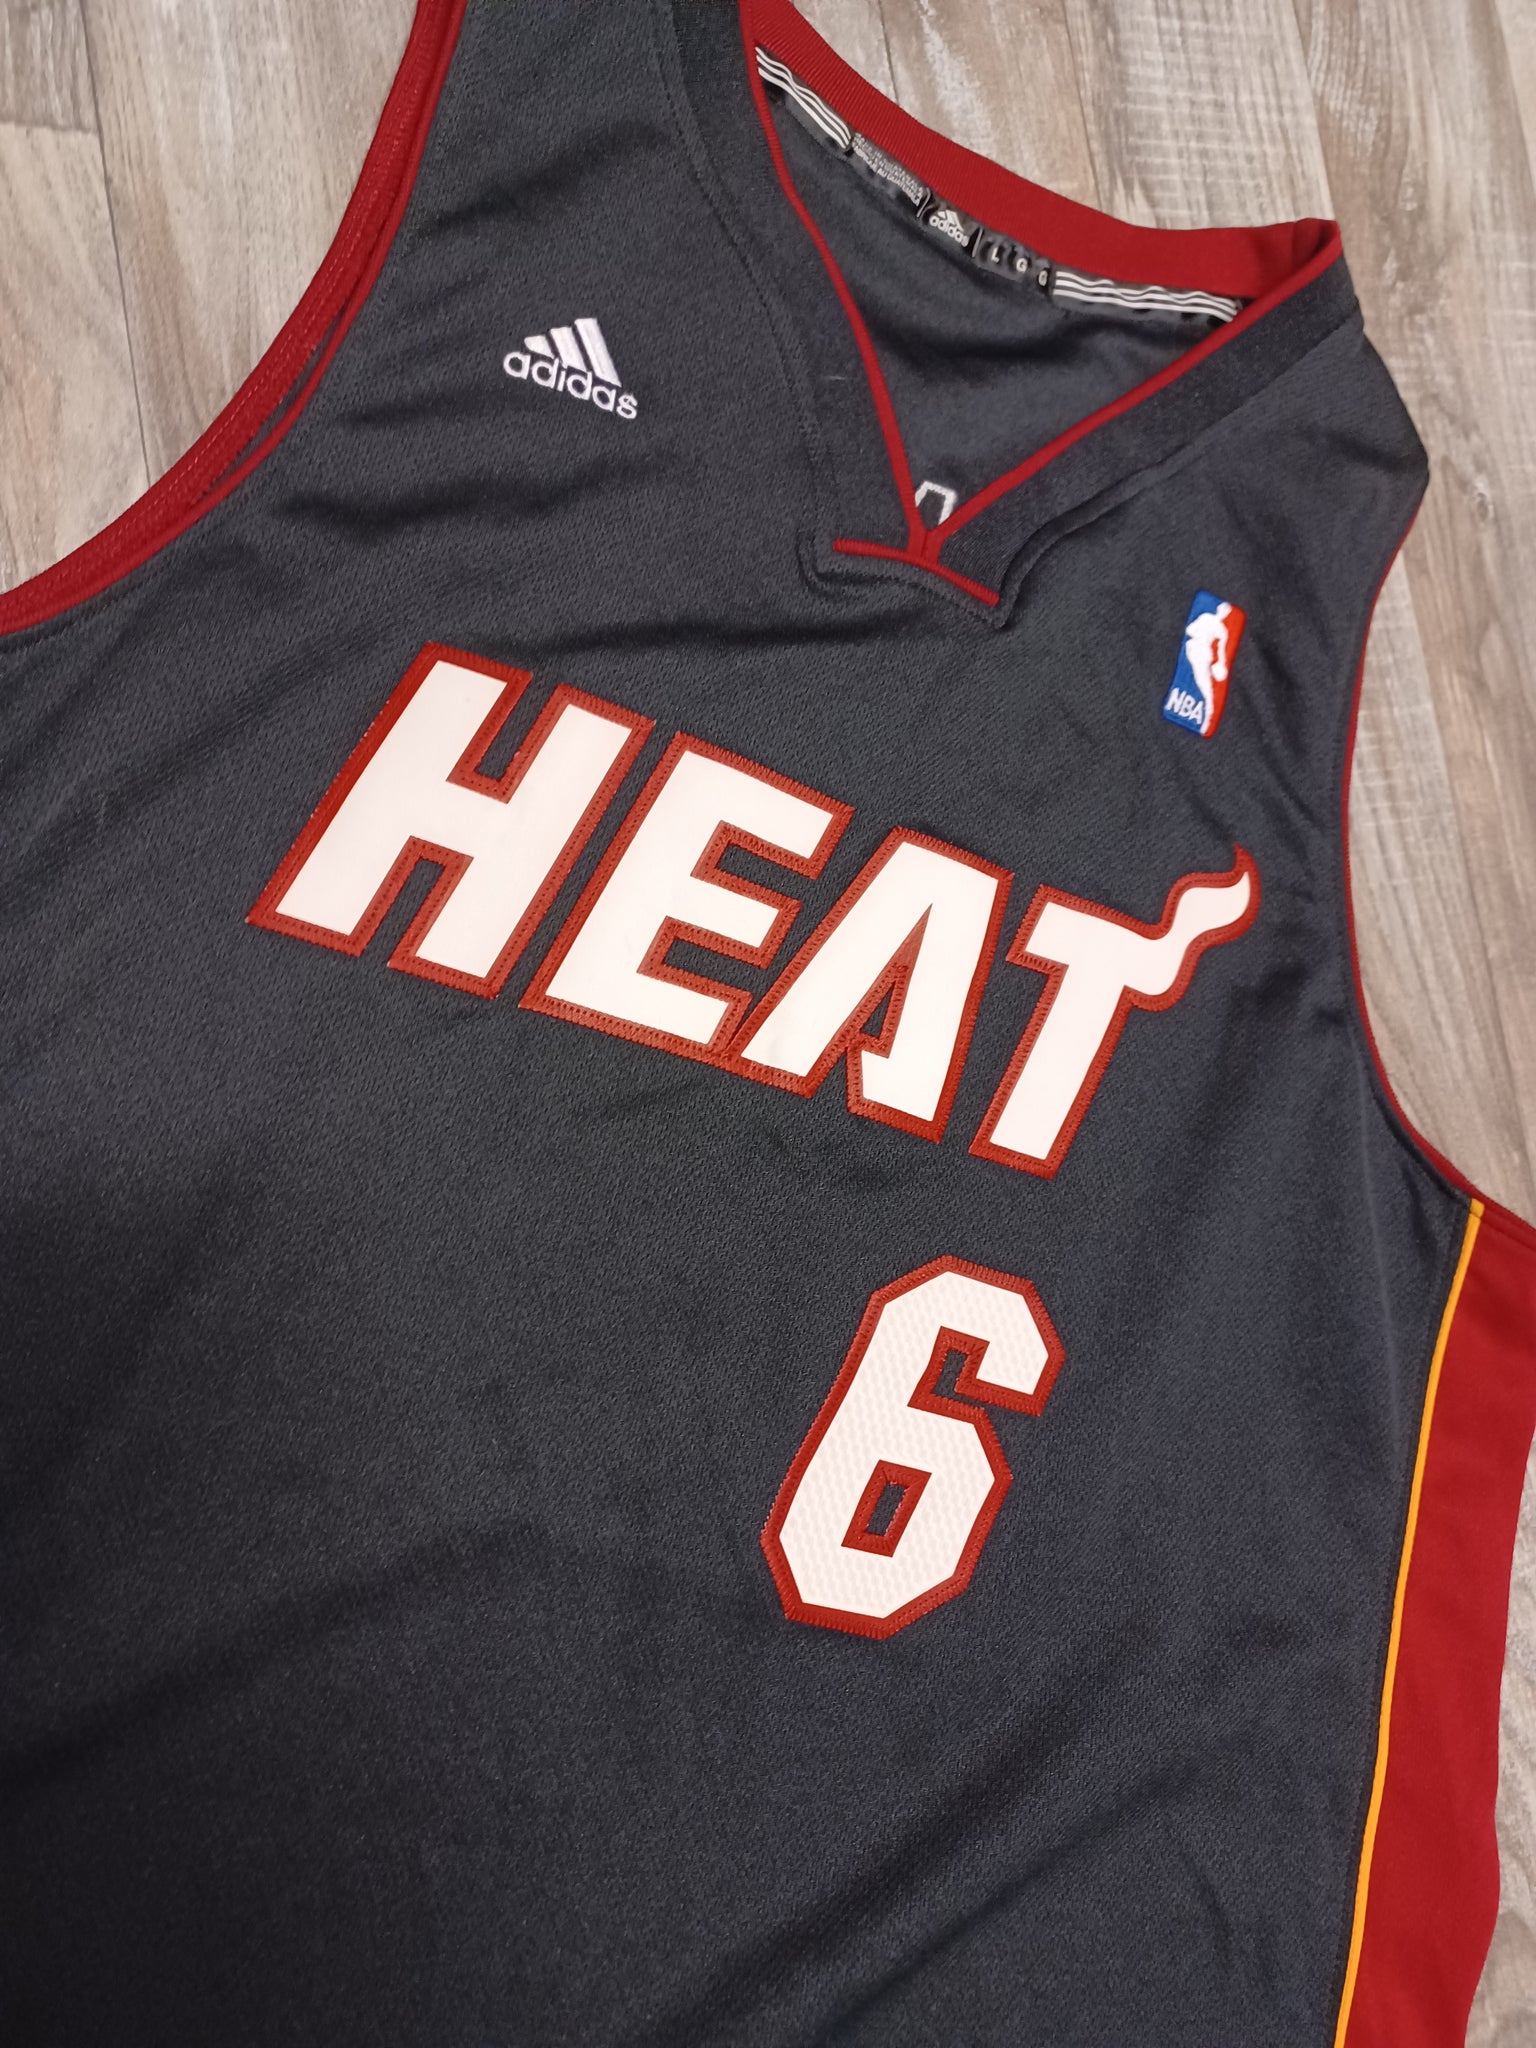 Adidas NBA Miami Heat Alternate Lebron James Basketball Jersey